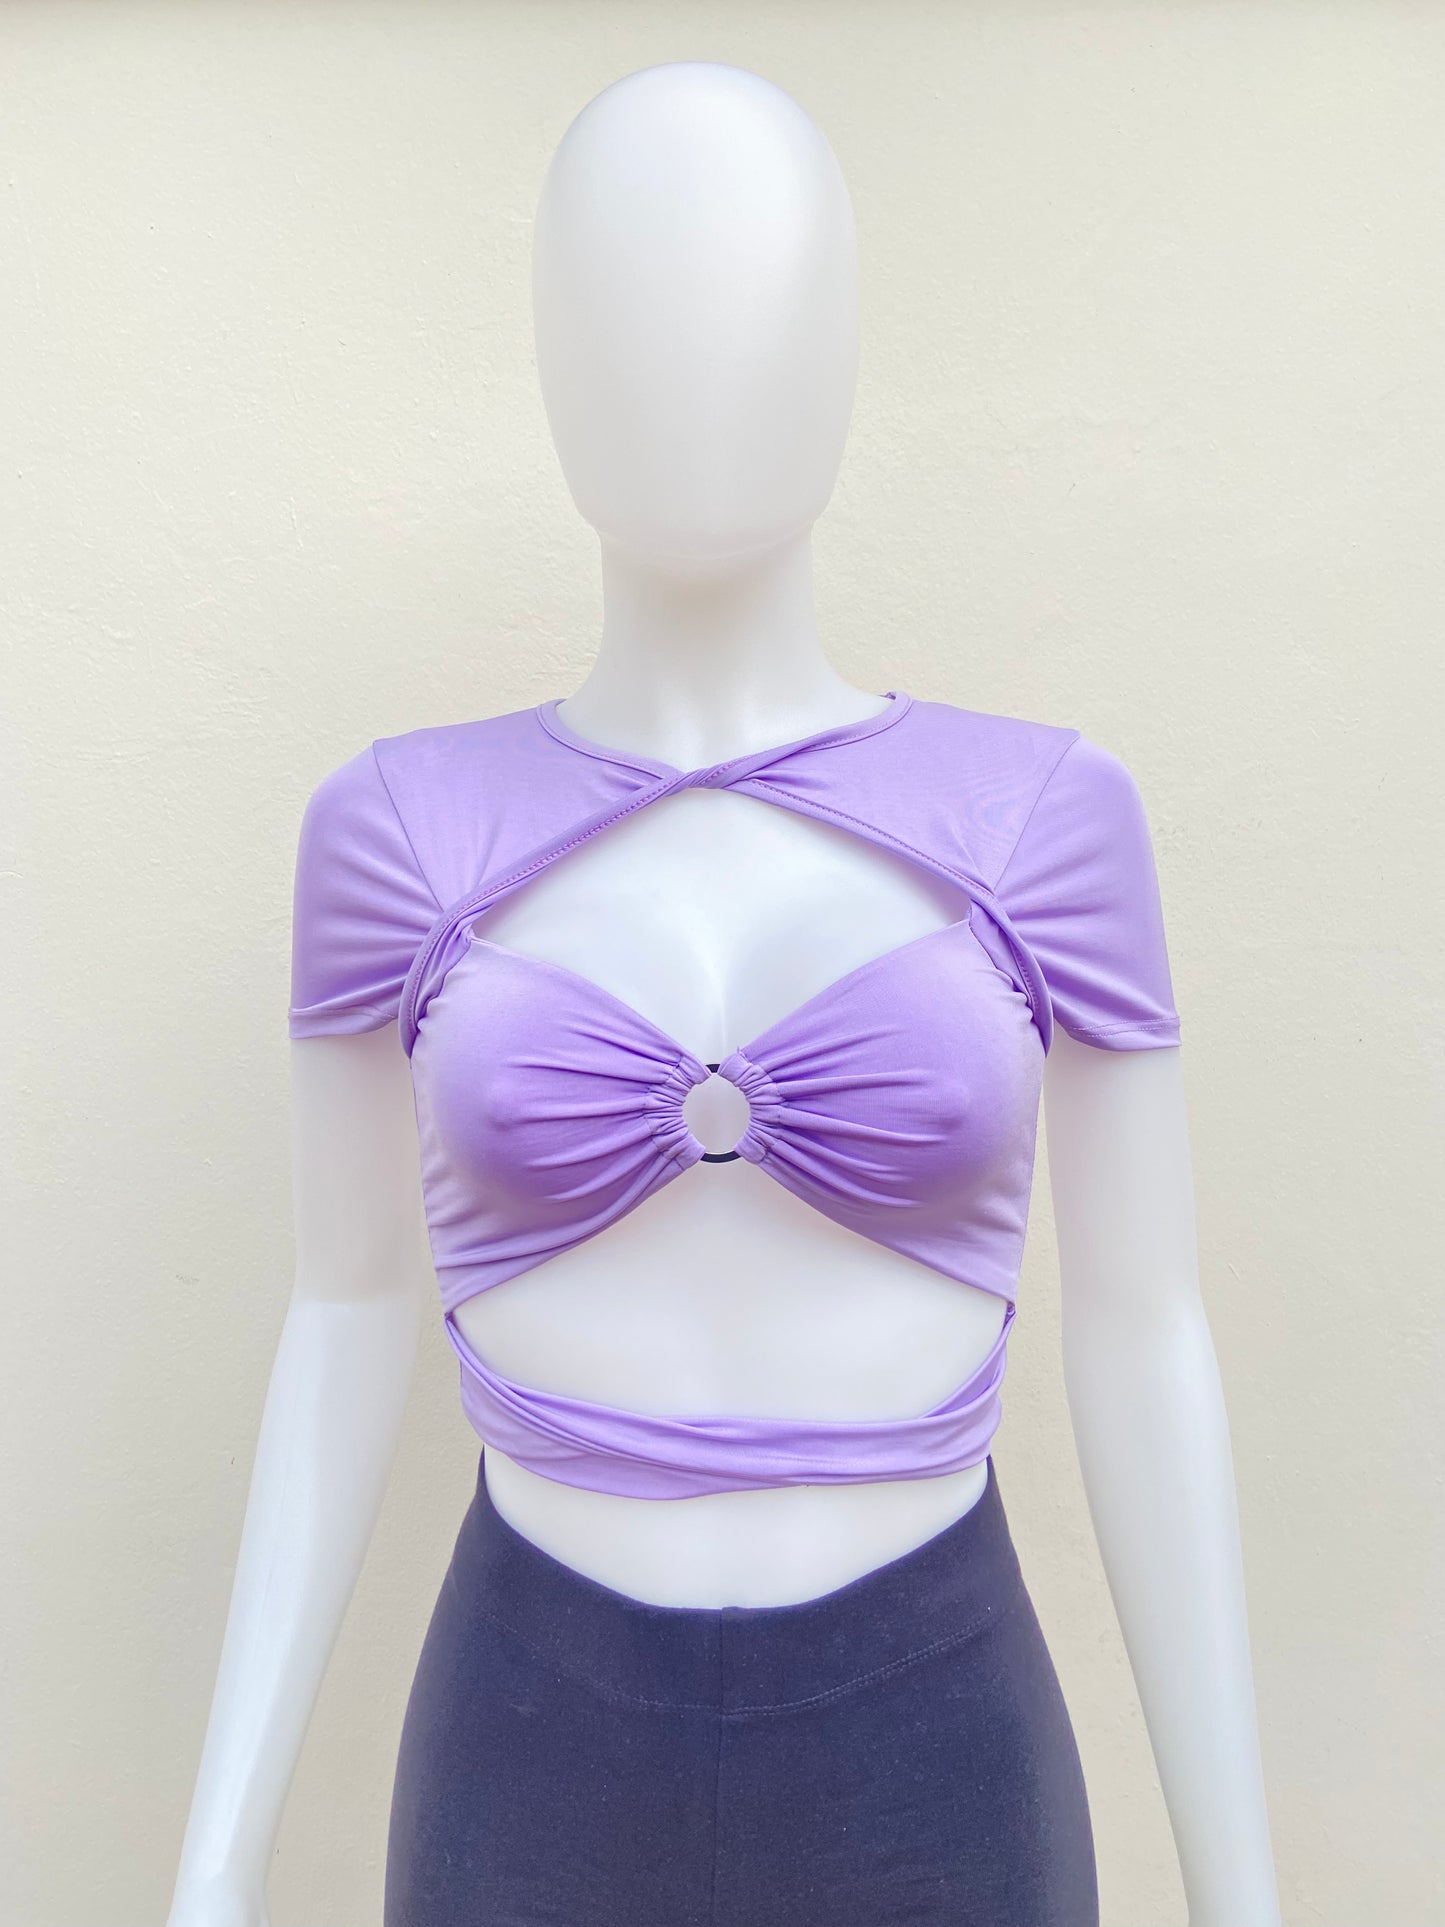 Top Fashion Nova original morado lila ( lavanda ) con abierto en frente.